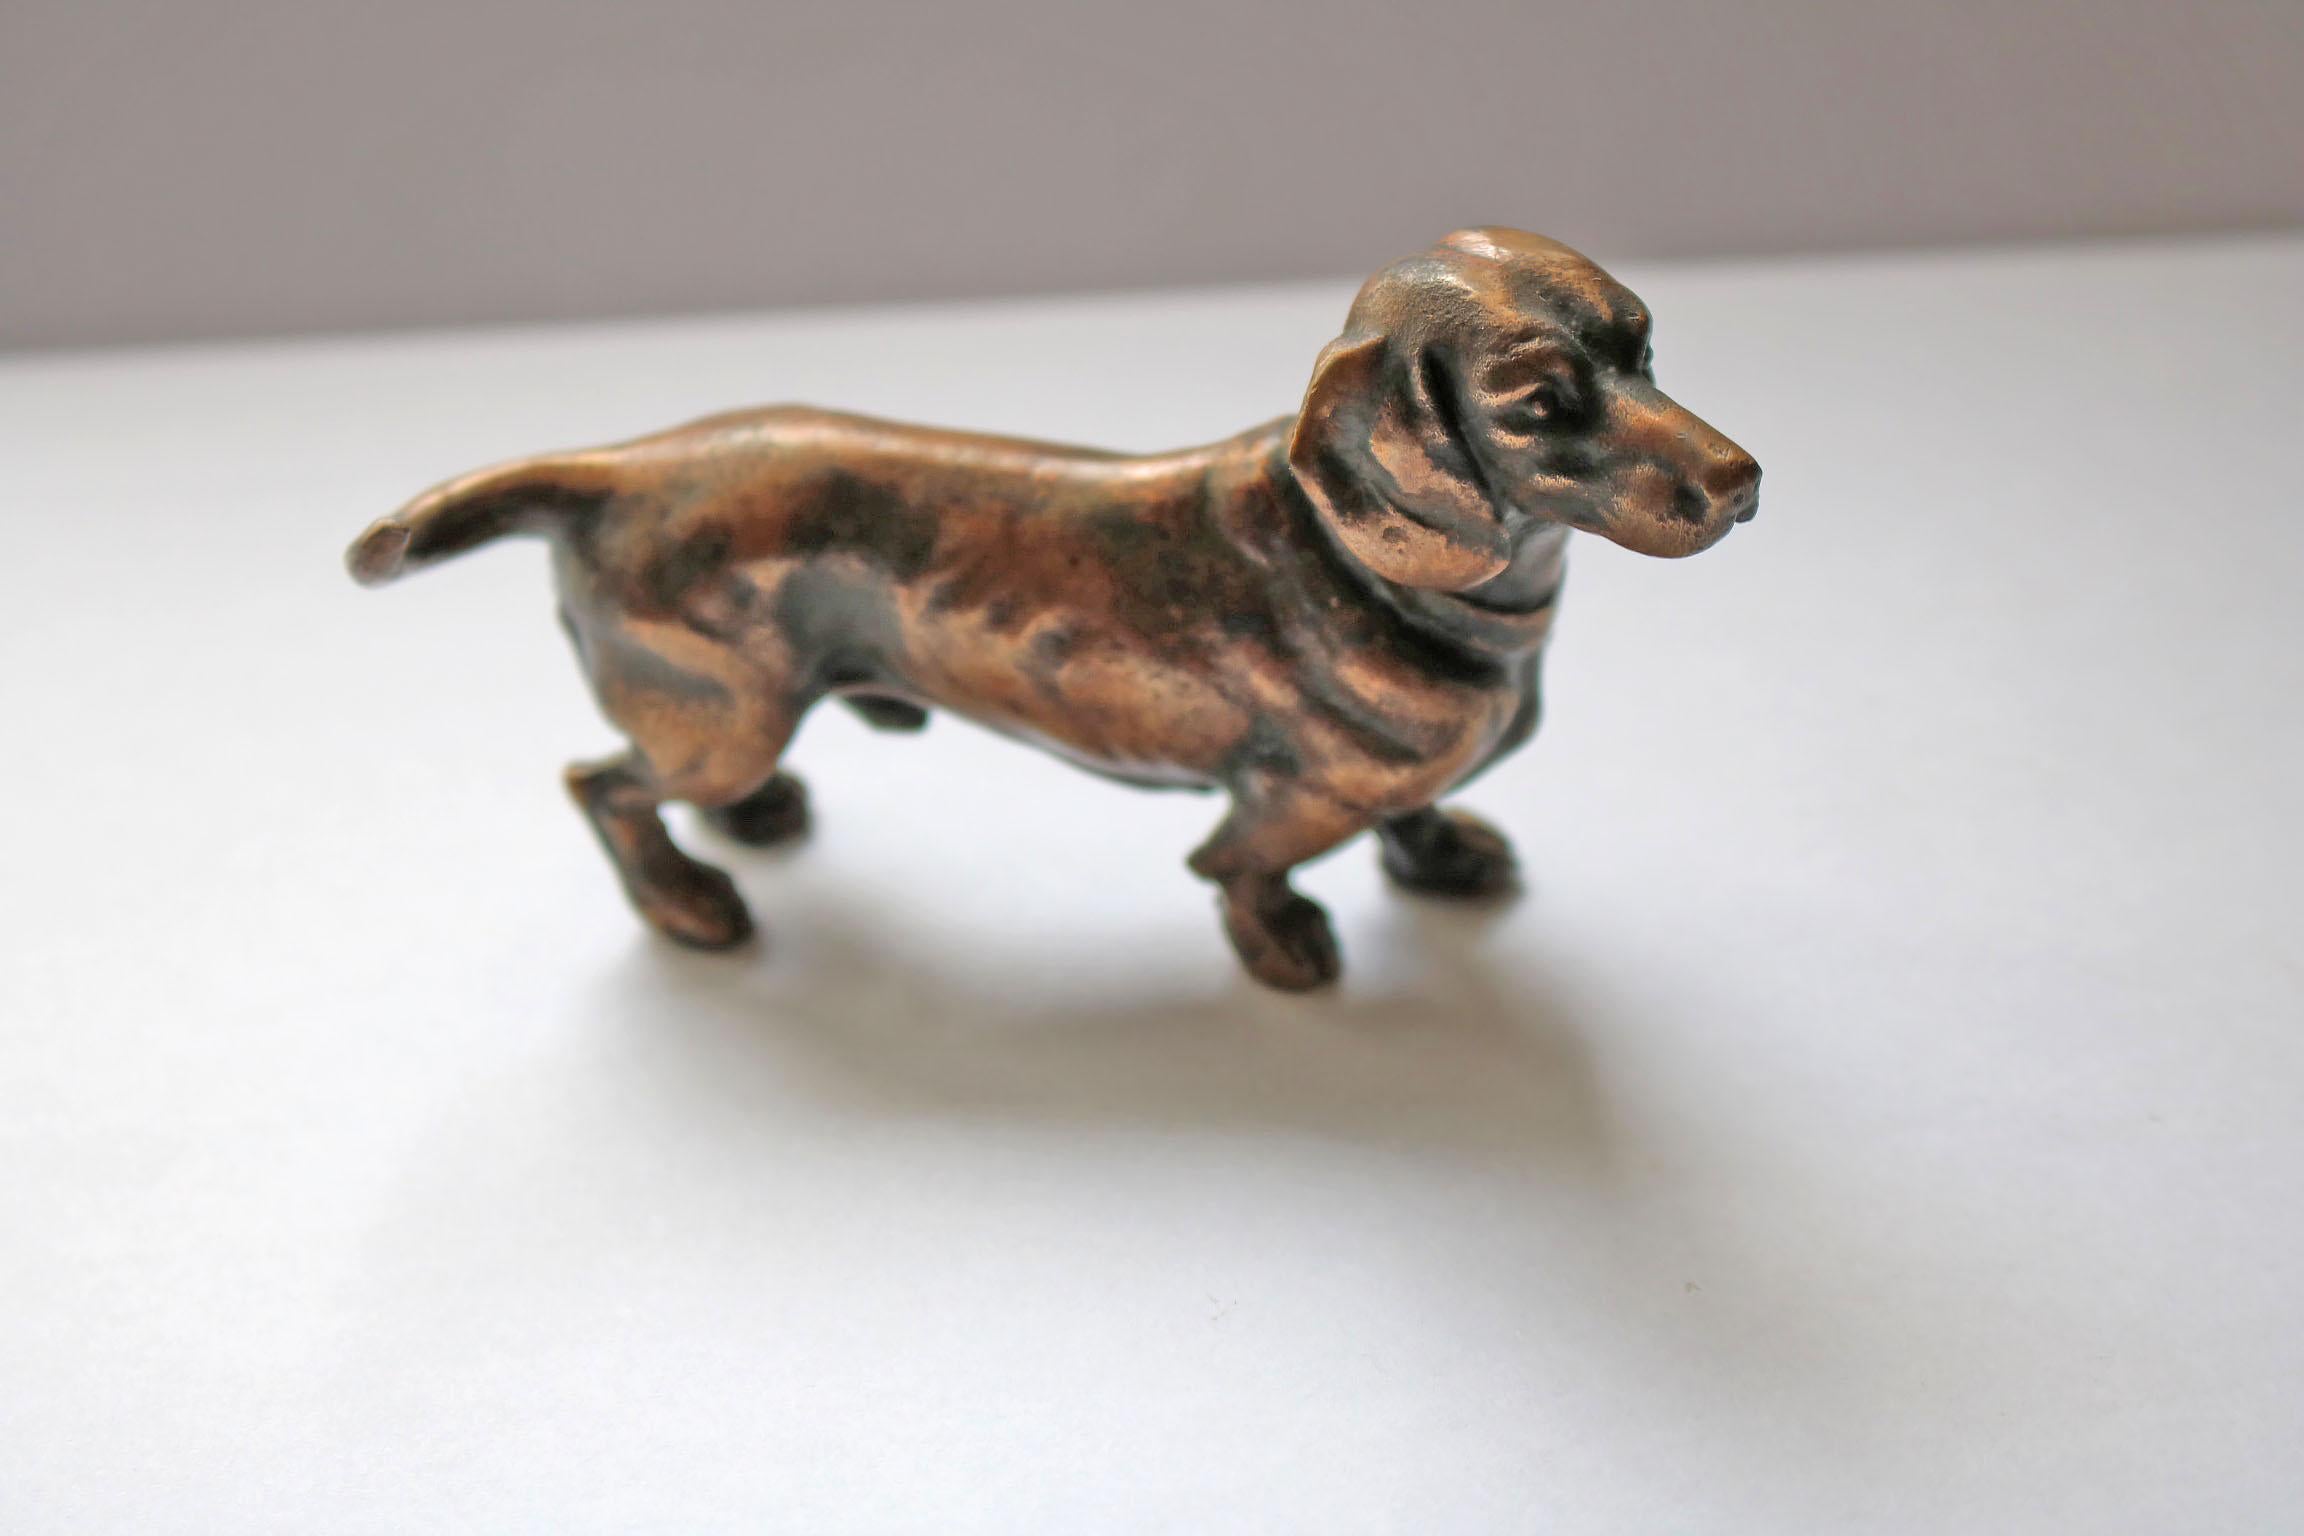 A beautiful miniature bronze sculpture, part of a collection